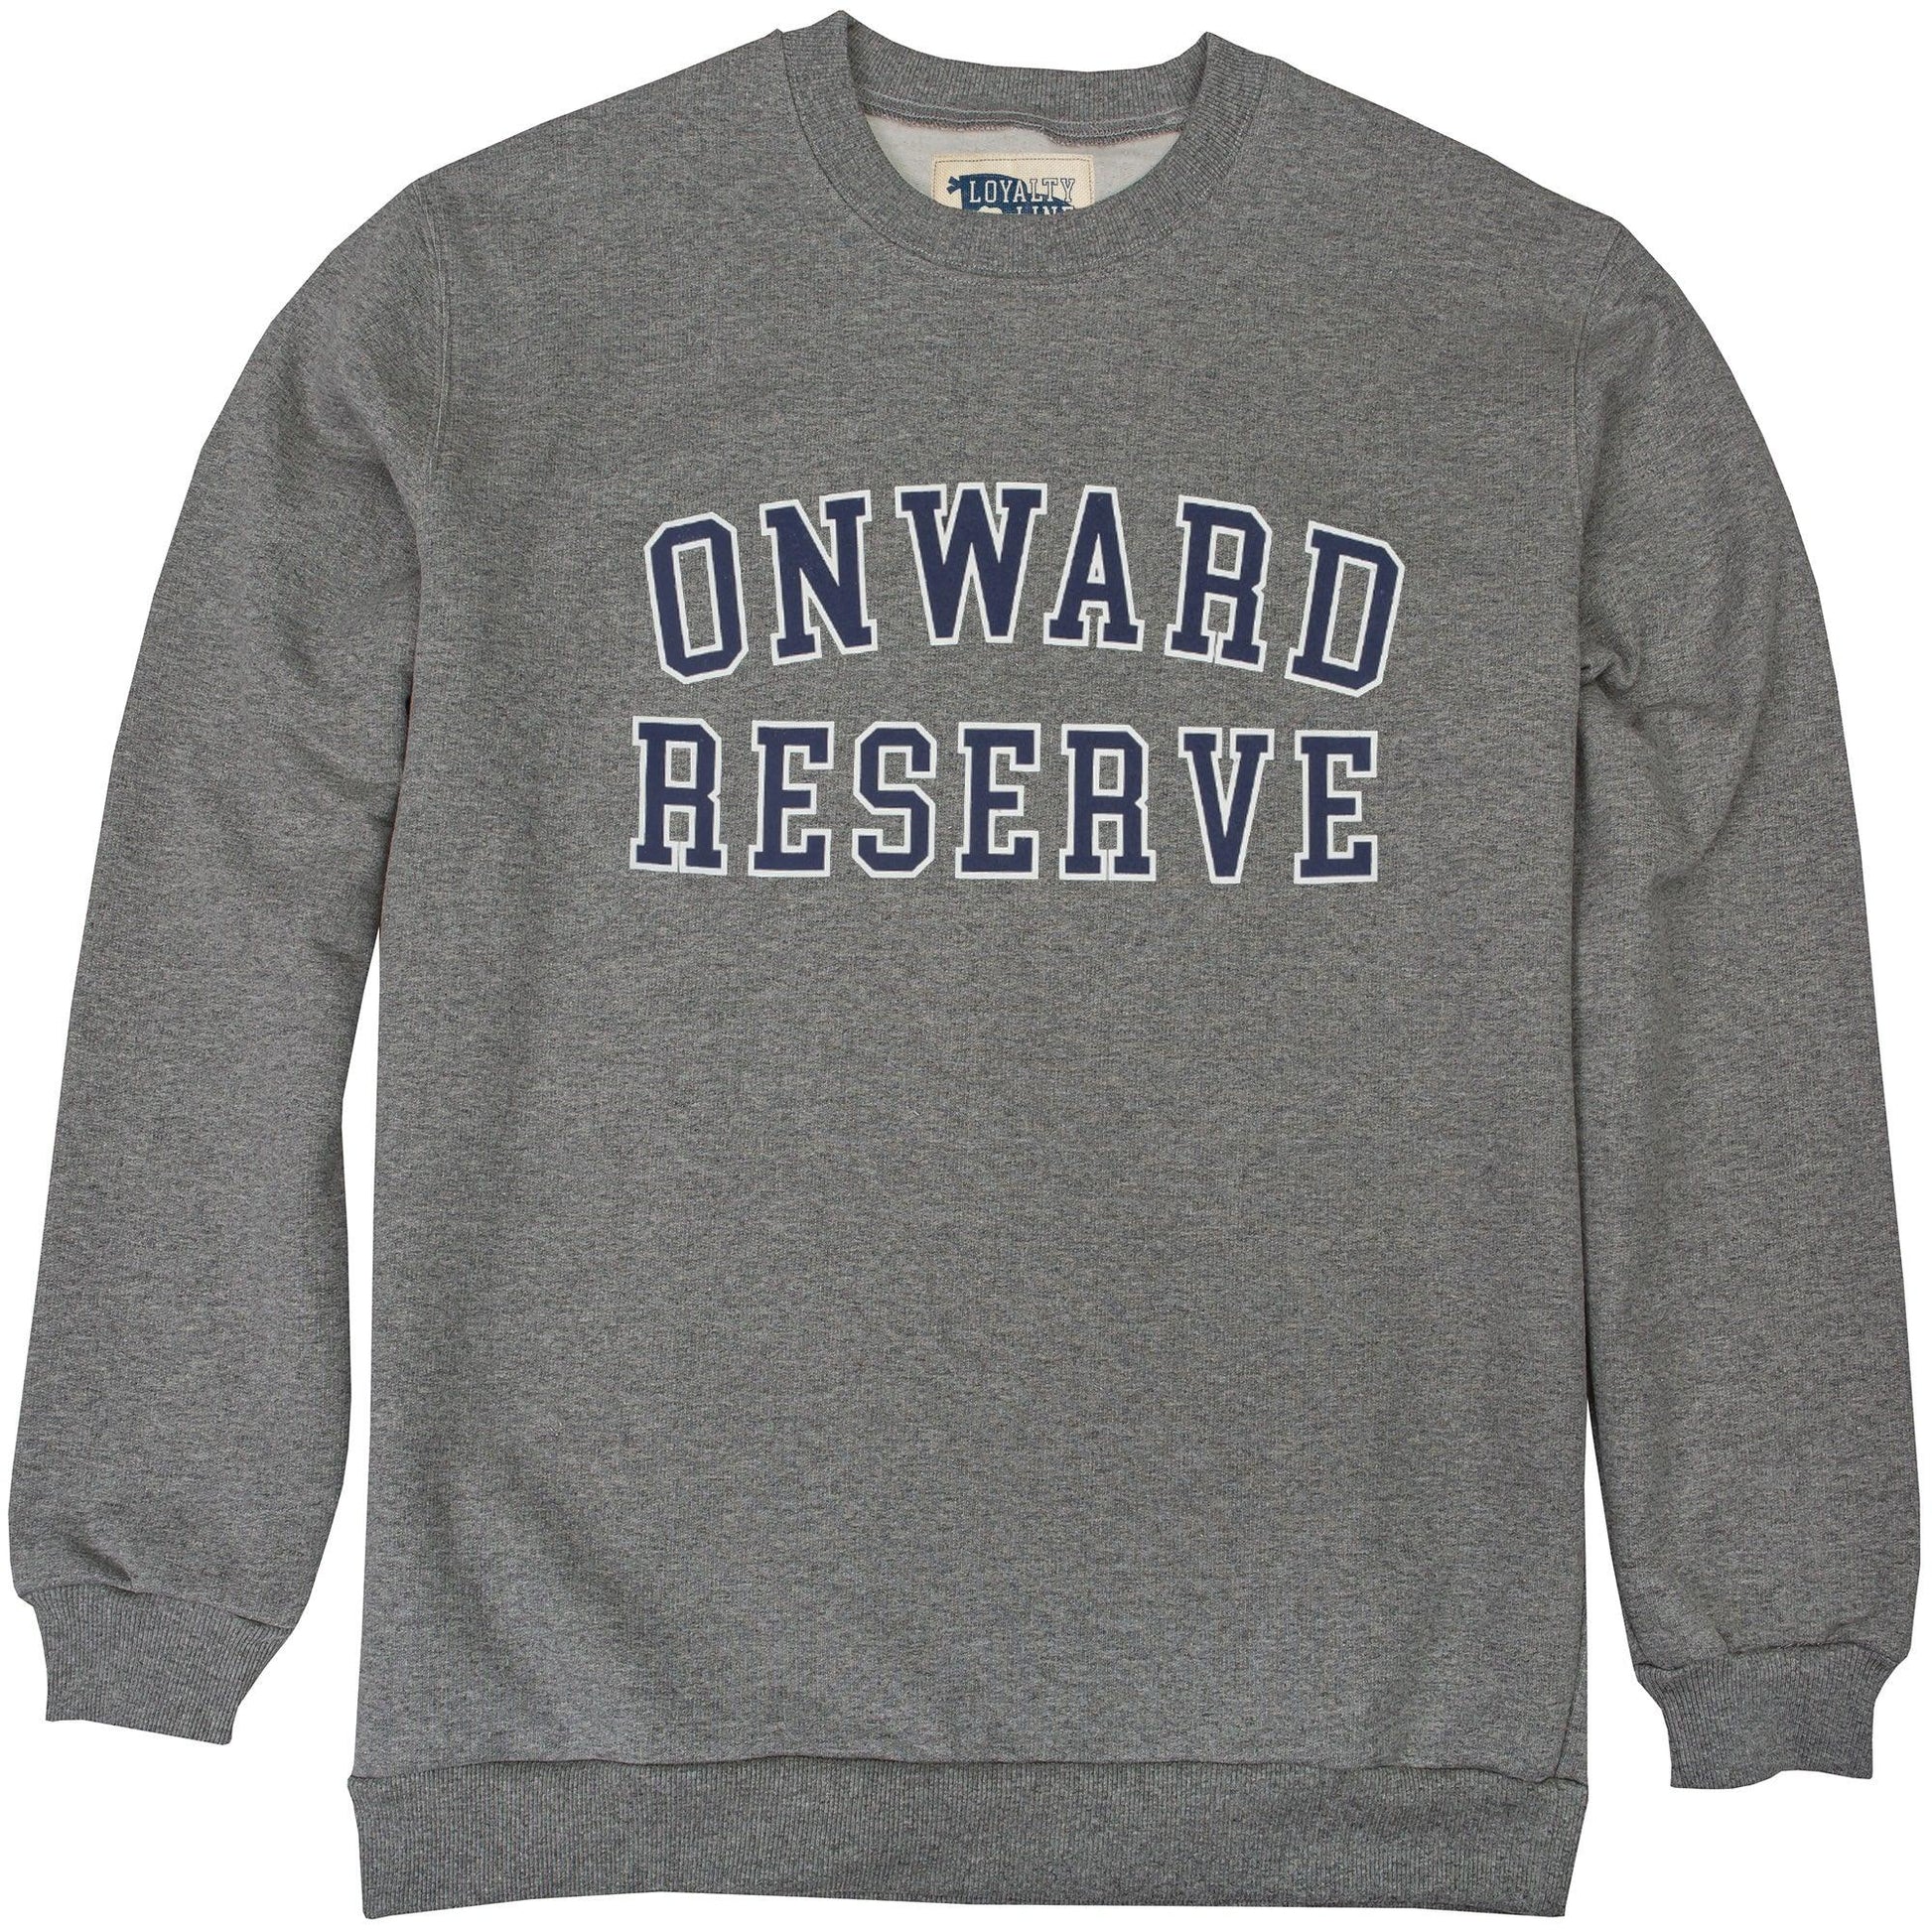 Onward Reserve Loyalty Vintage Crew Neck Sweatshirt Grey Heather / L